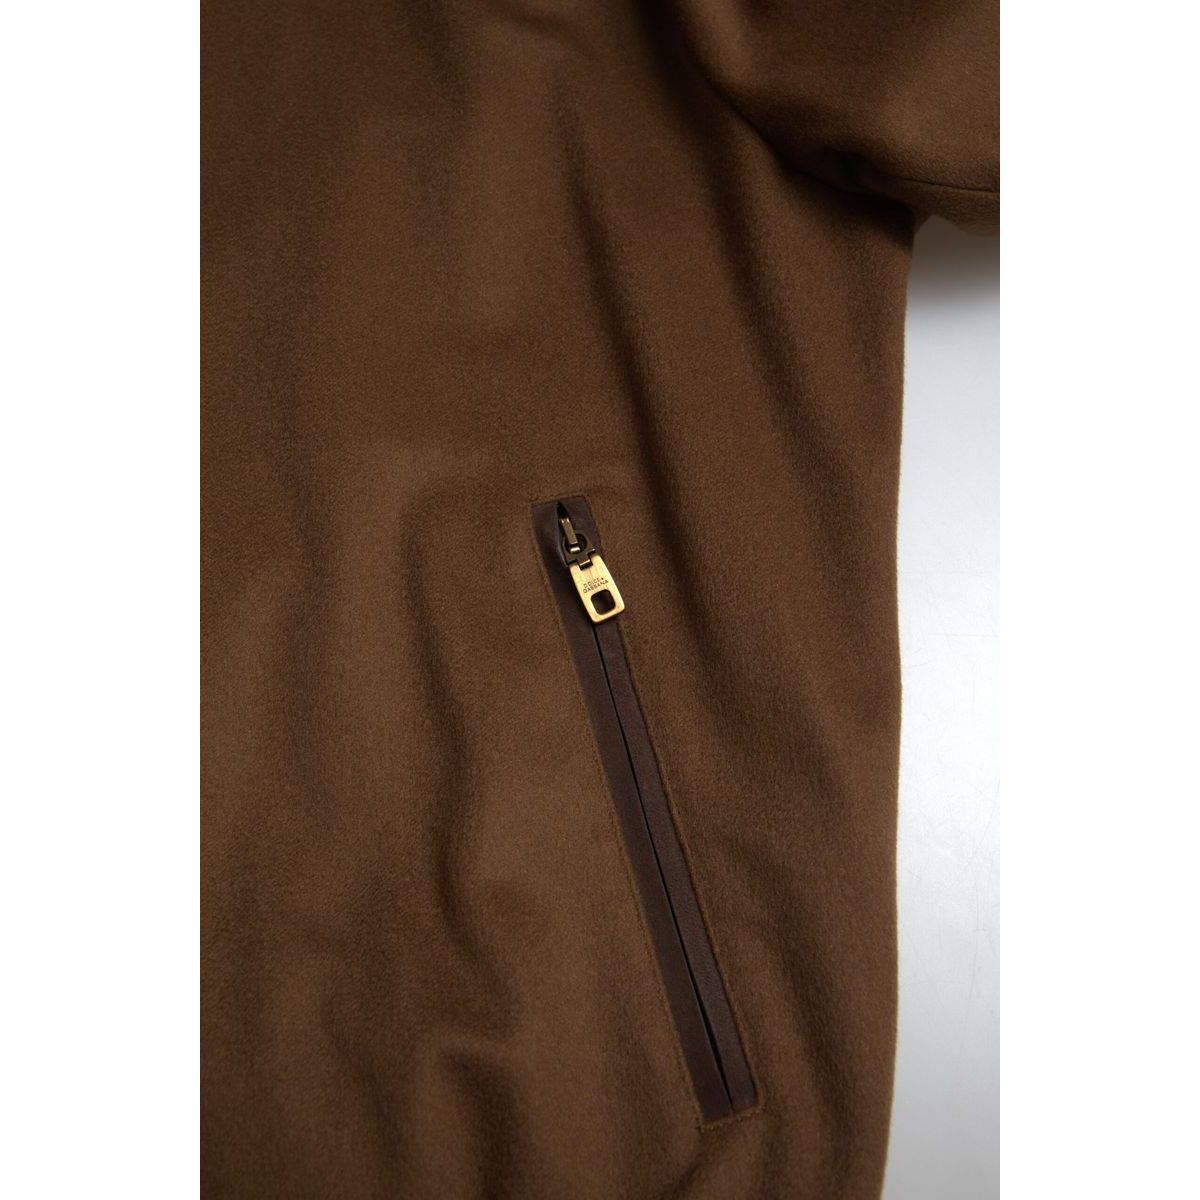 Dolce & Gabbana Elegant Brown Cashmere Bomber Jacket brown-cashmere-full-zip-bomber-men-jacket 465A7690-scaled-013975c1-3d0.jpg